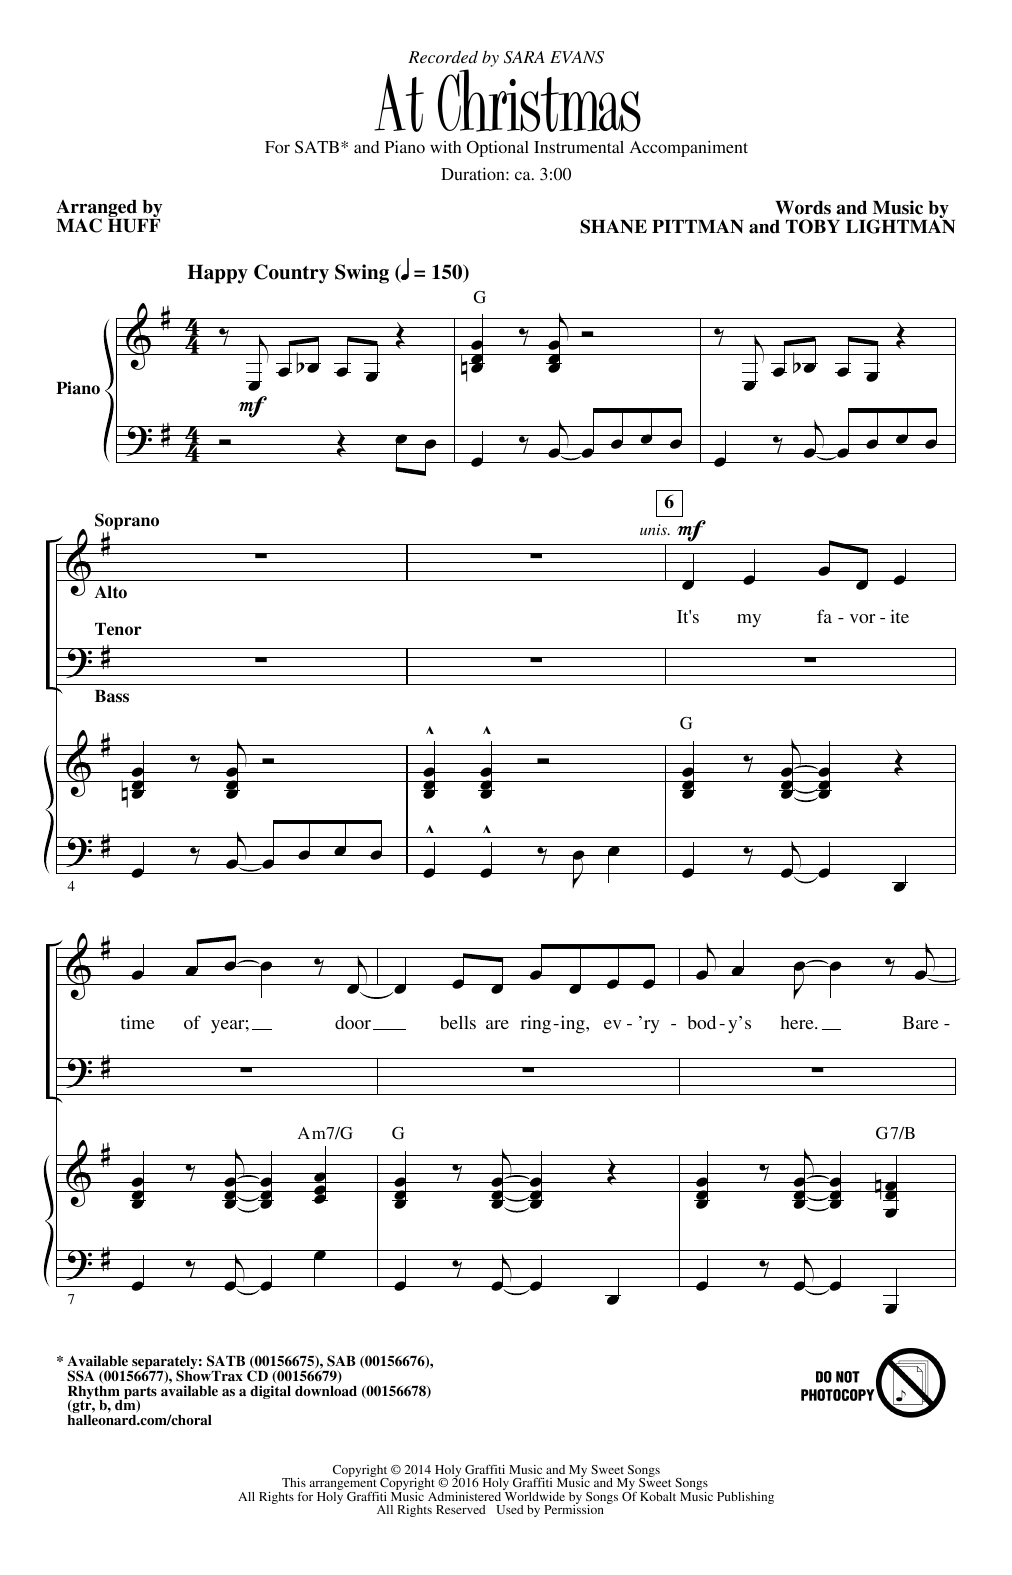 Sara Evans At Christmas (arr. Mac Huff) Sheet Music Notes & Chords for SAB - Download or Print PDF